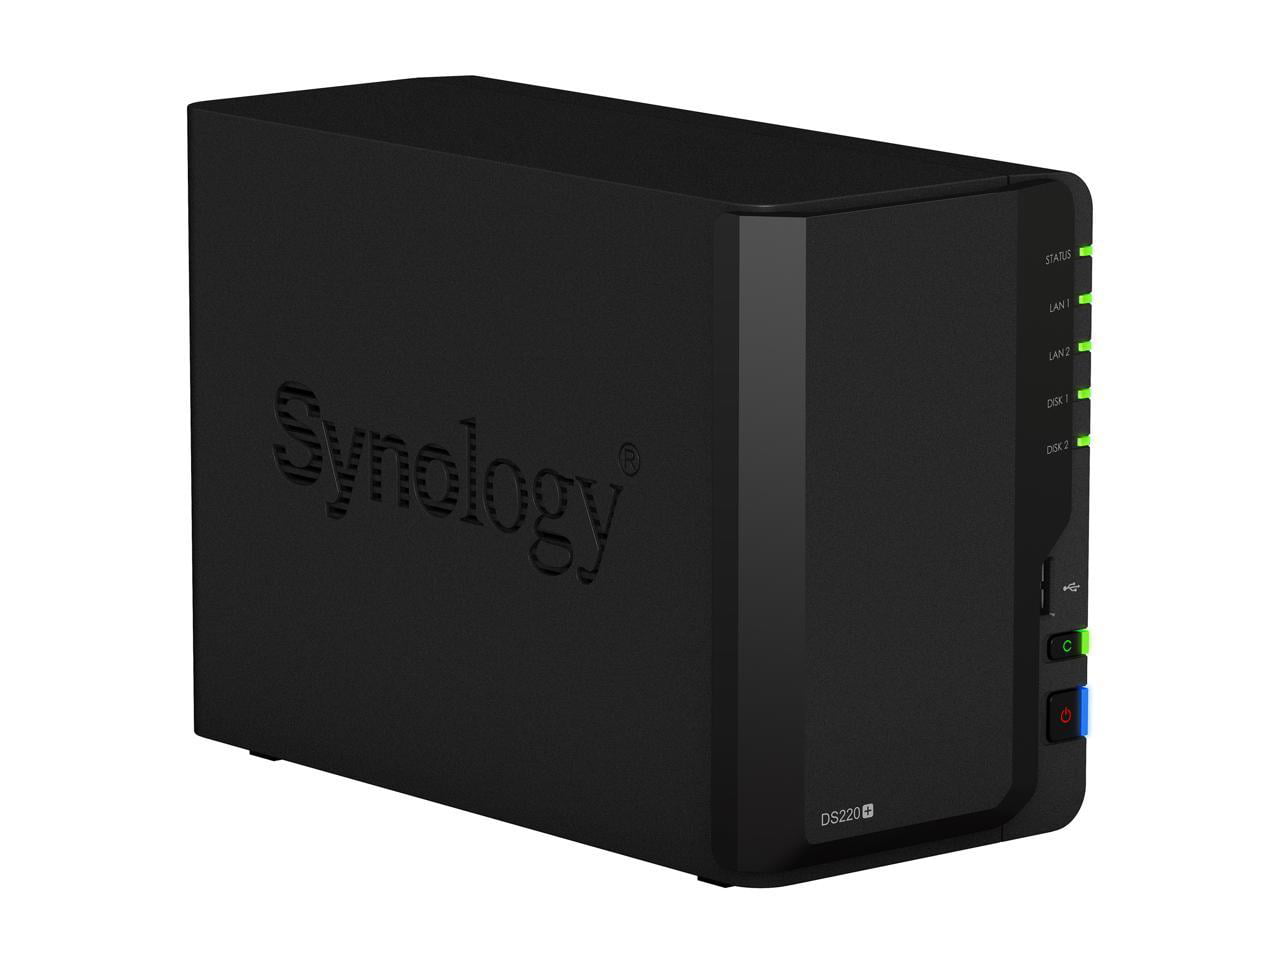 Synology DiskStation DS220+ 2-Bay NAS Enclosure, Black - Walmart.com